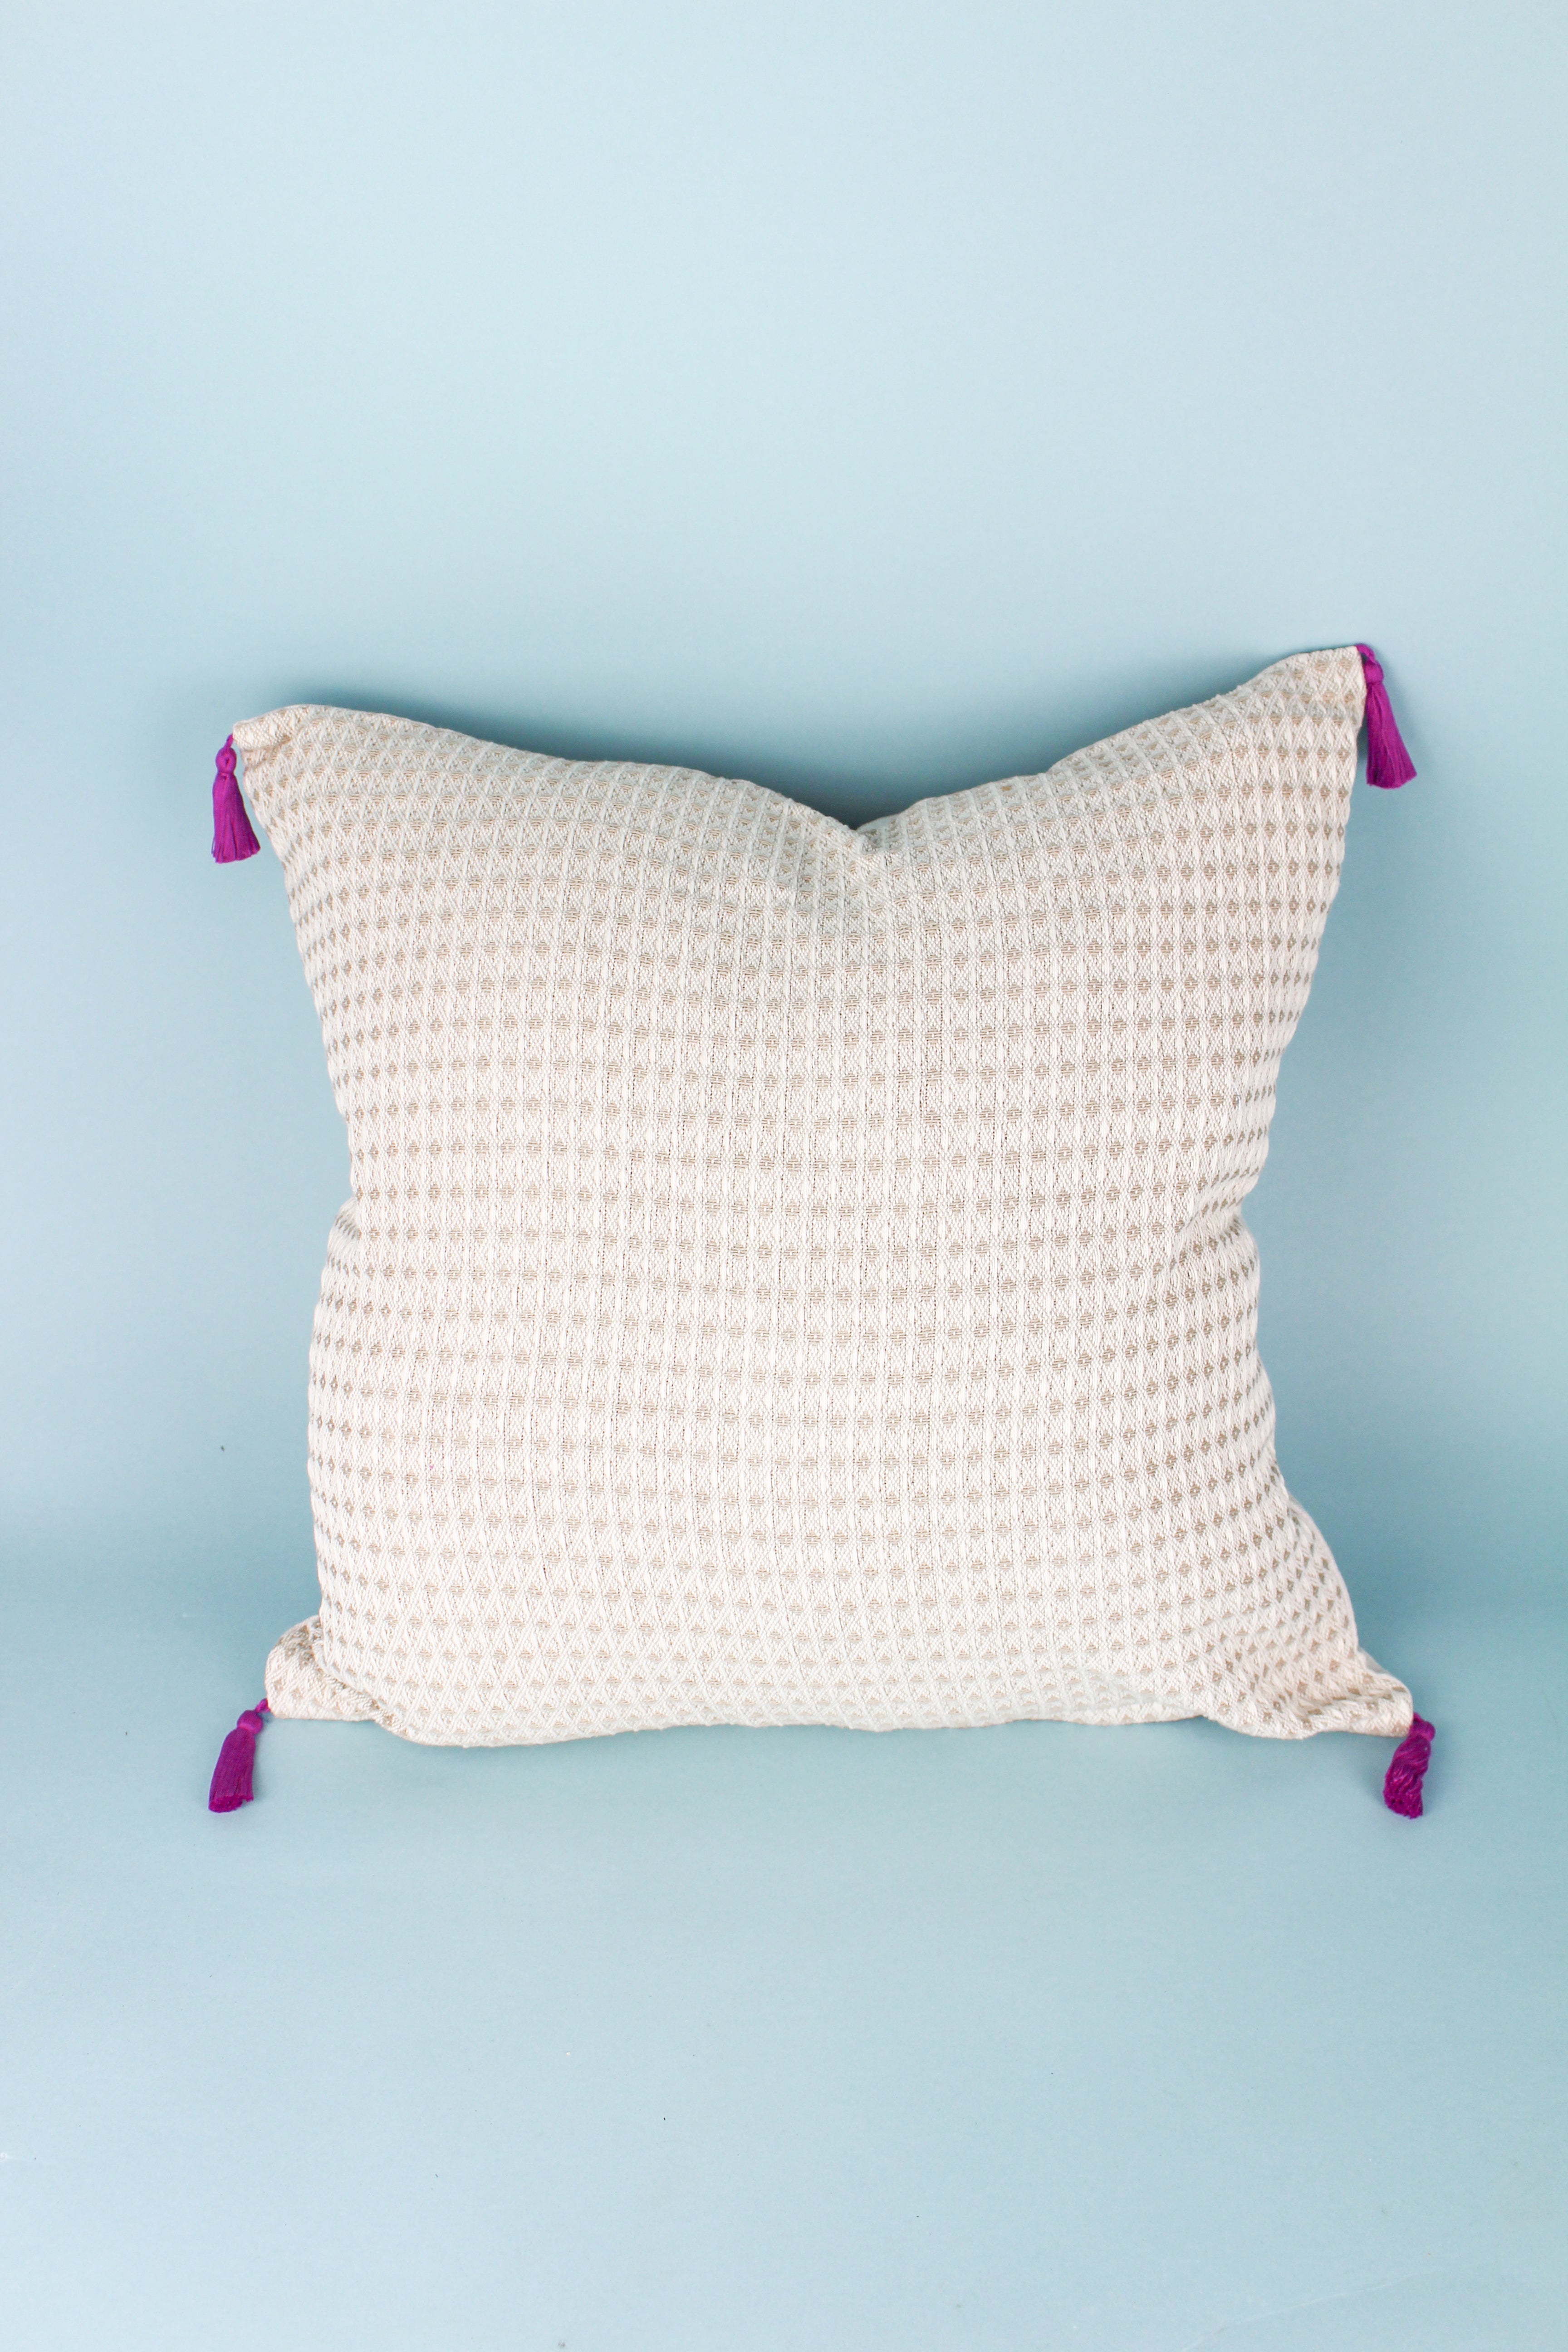 Small Diamond Print Pillowcases (Set of 2) - Pillows - Pisu - Brand_Pisu - Home_Decor - KTFWHS - Textiles_Throw Pillows & Blankets - Y003